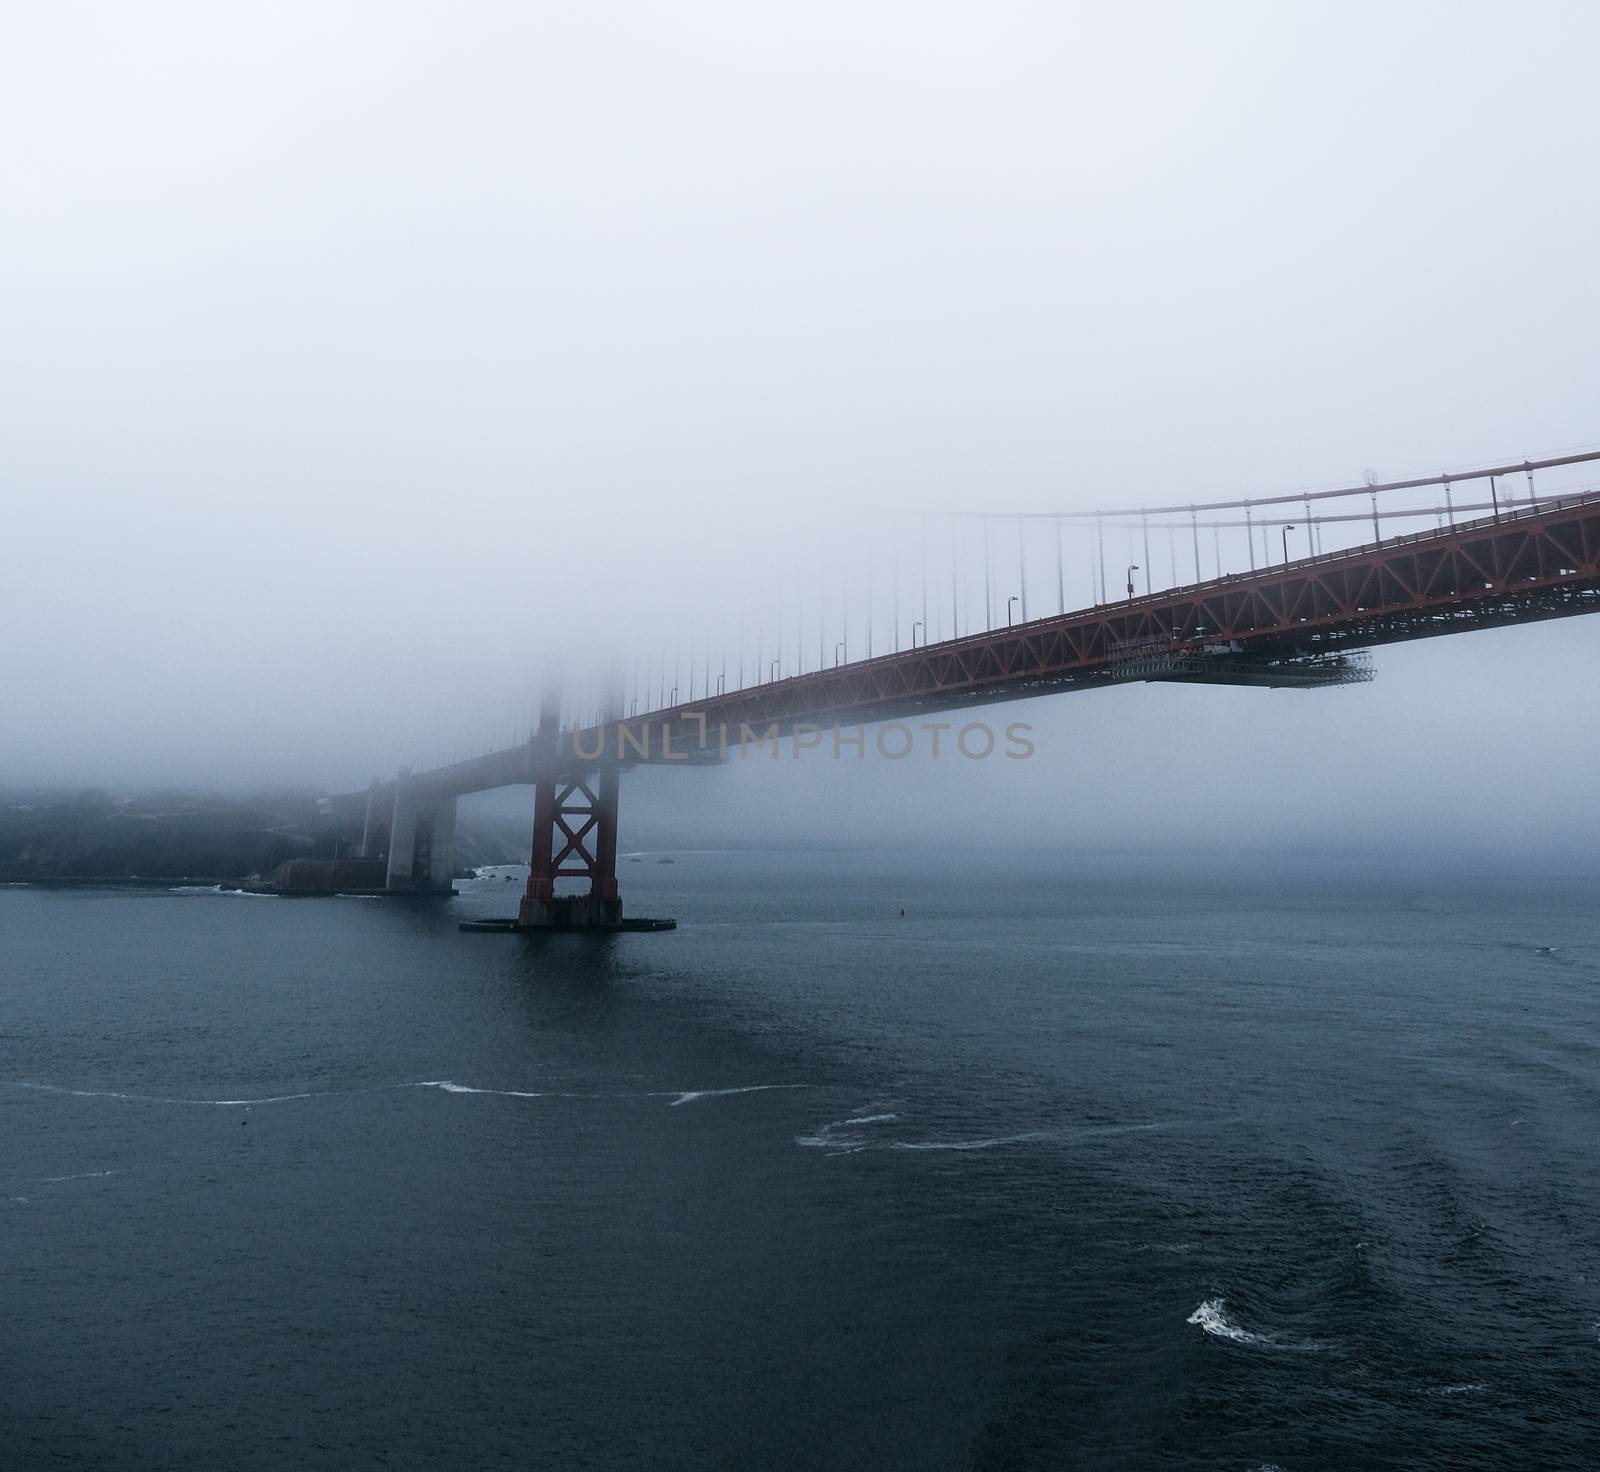 Golden Gate Rising From Fog in San Francisco Bay